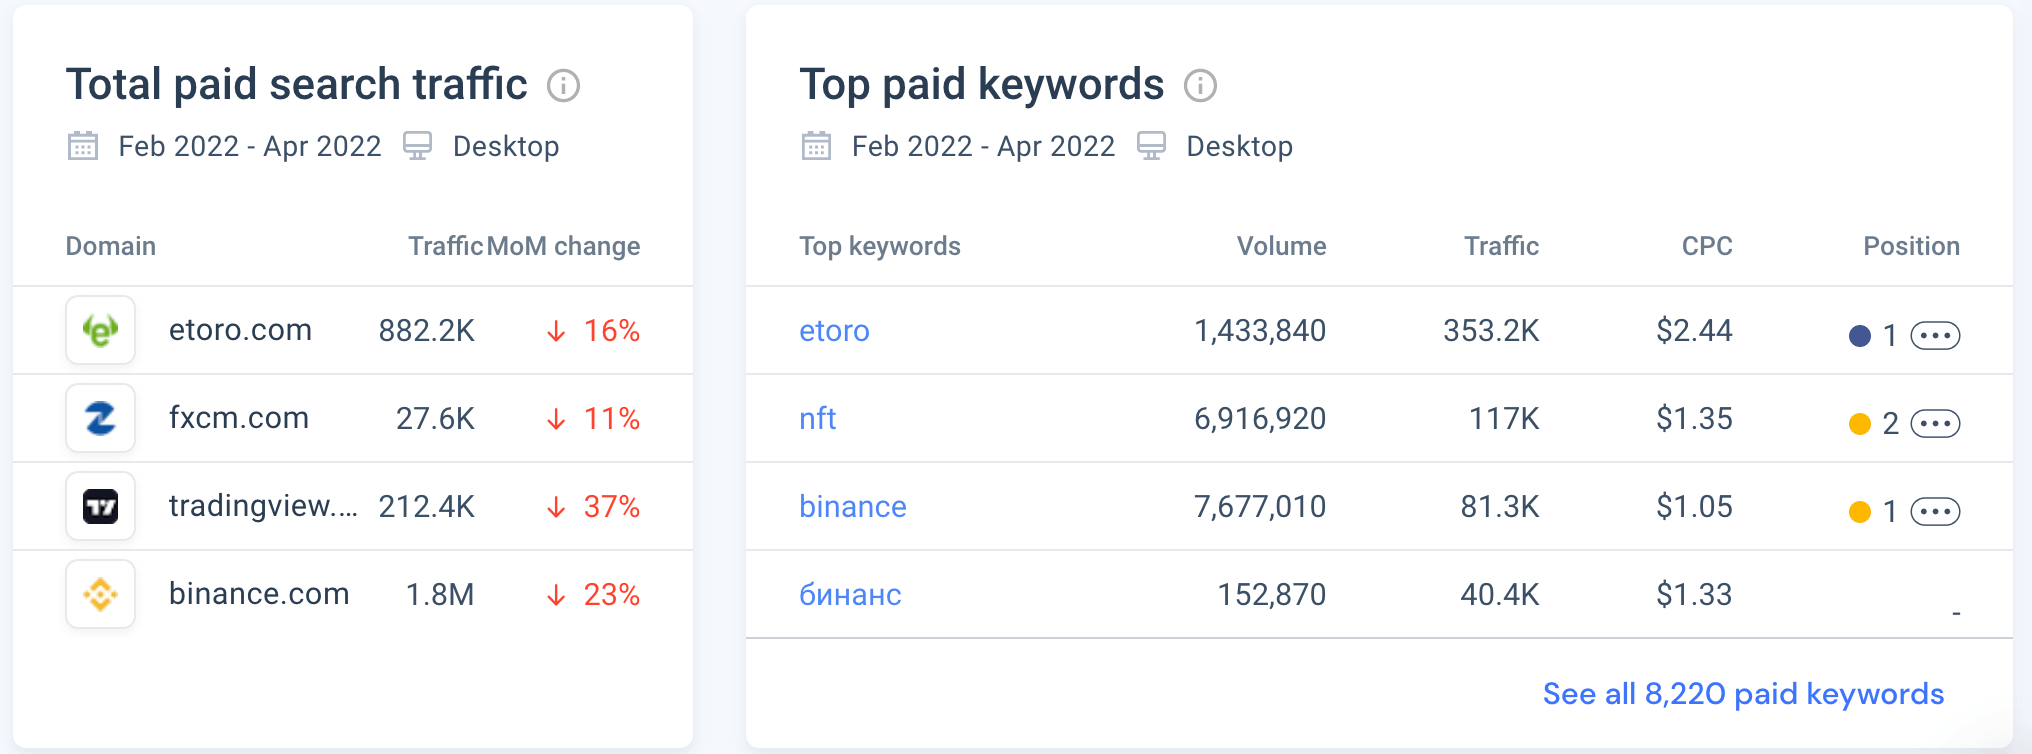 Screenshot of paid search traffic per keyword